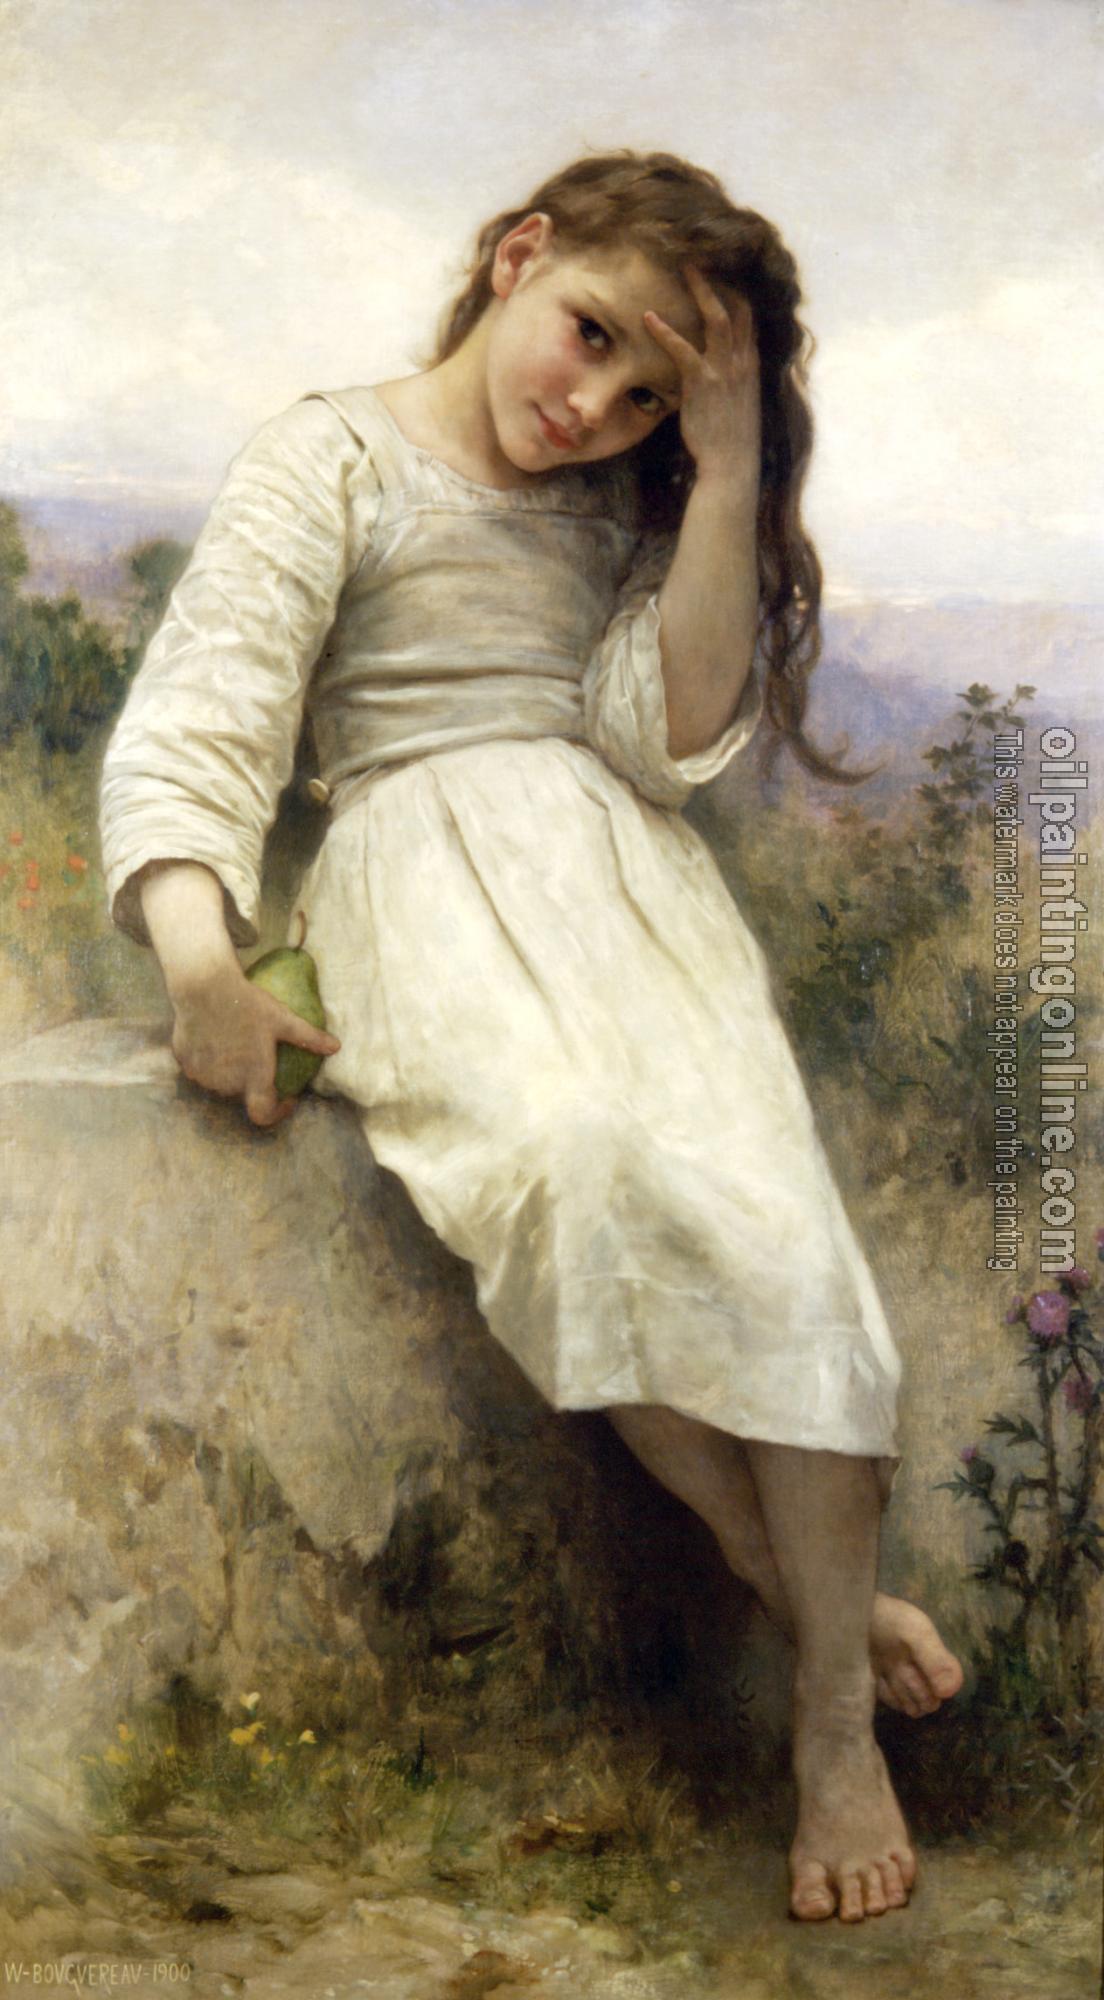 Bouguereau, William-Adolphe - Little Thief